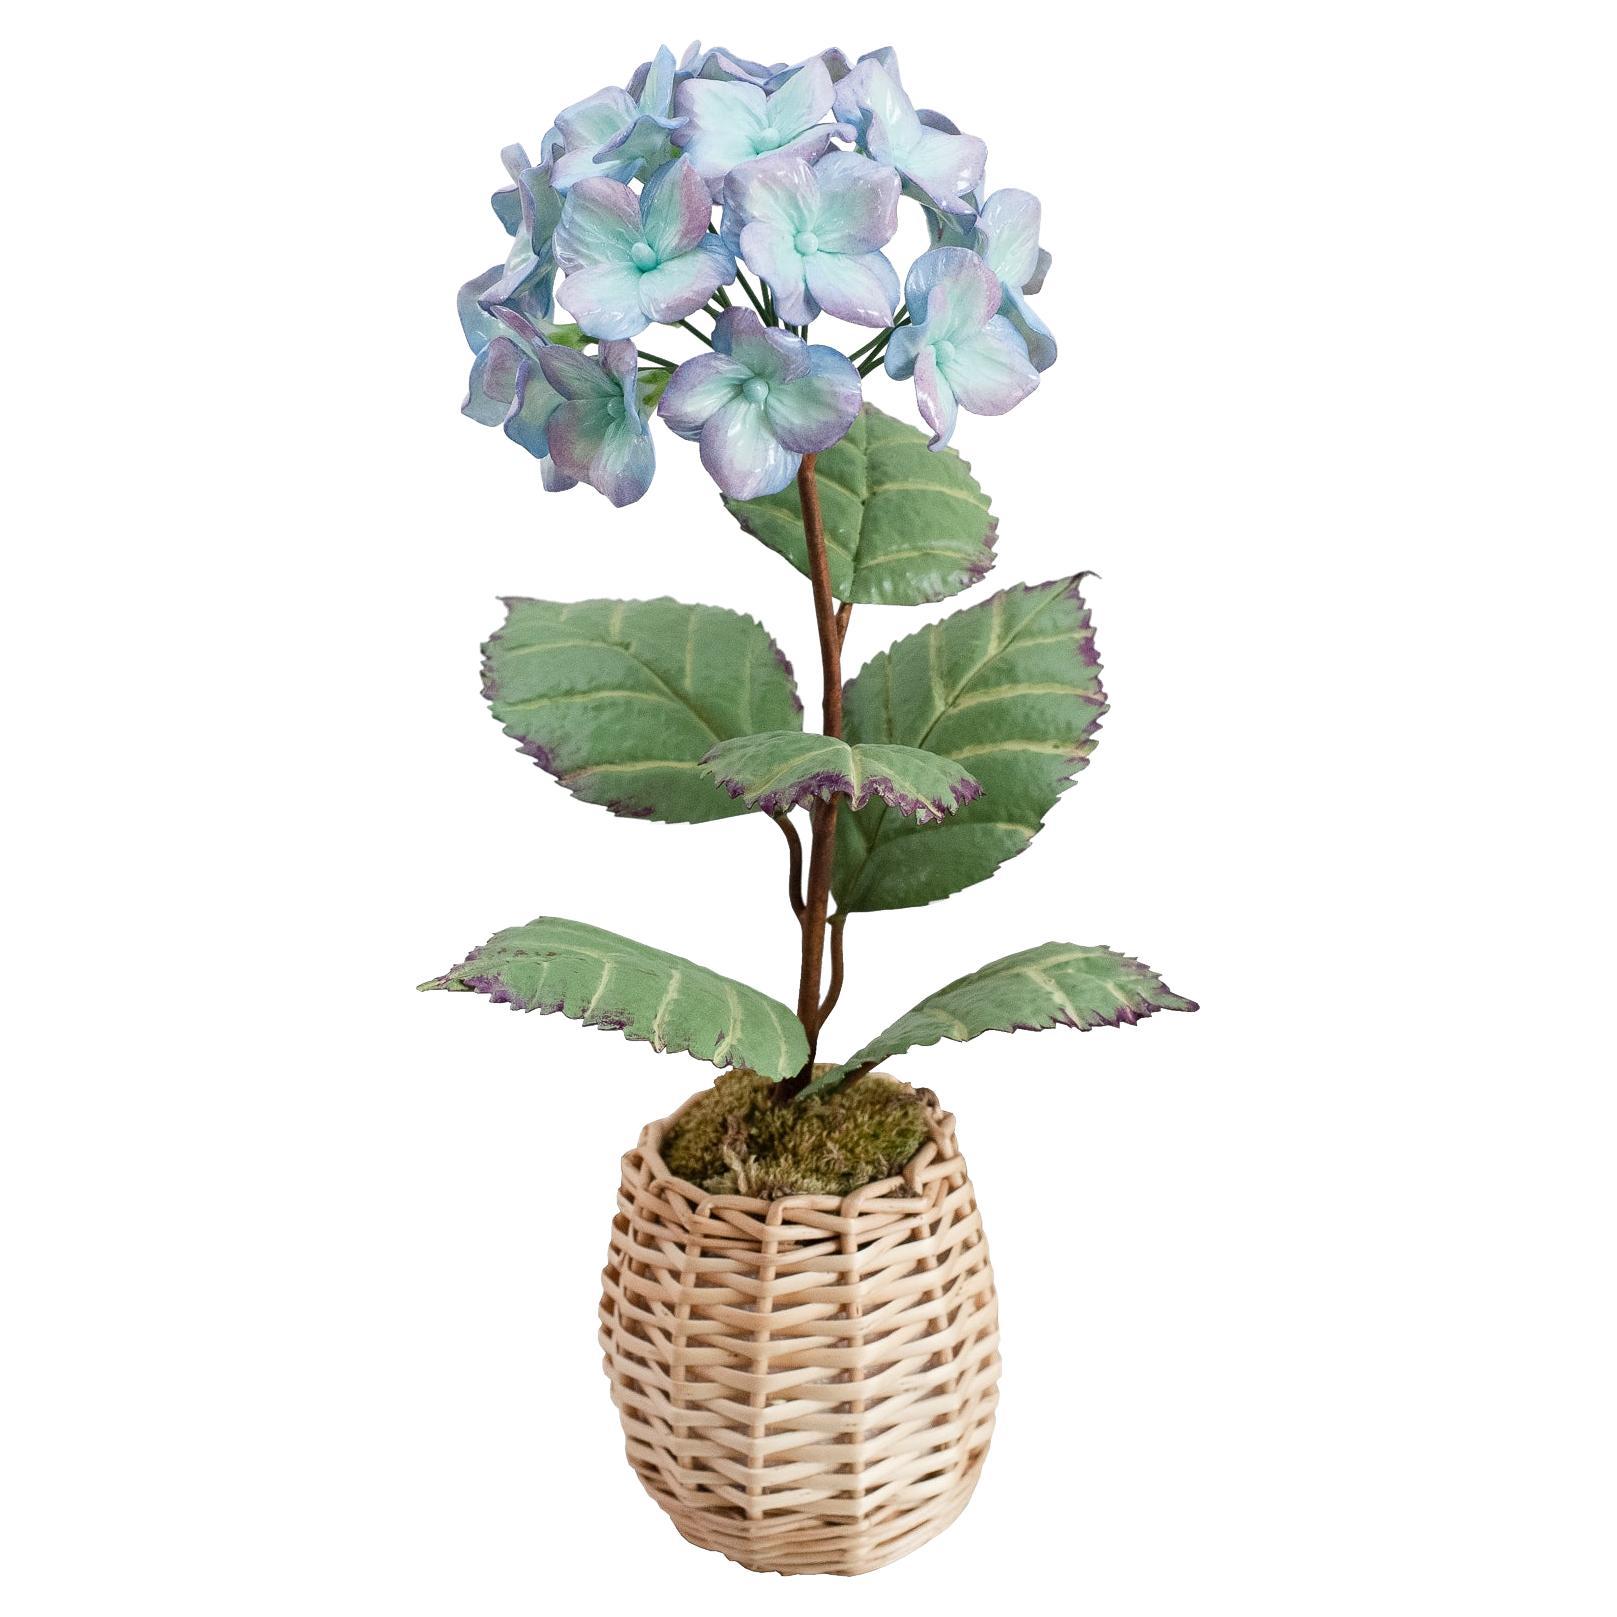 Samuel Mazy Glazed Porcelain Purple and Blue Hydrangea Flower Sculpture For Sale